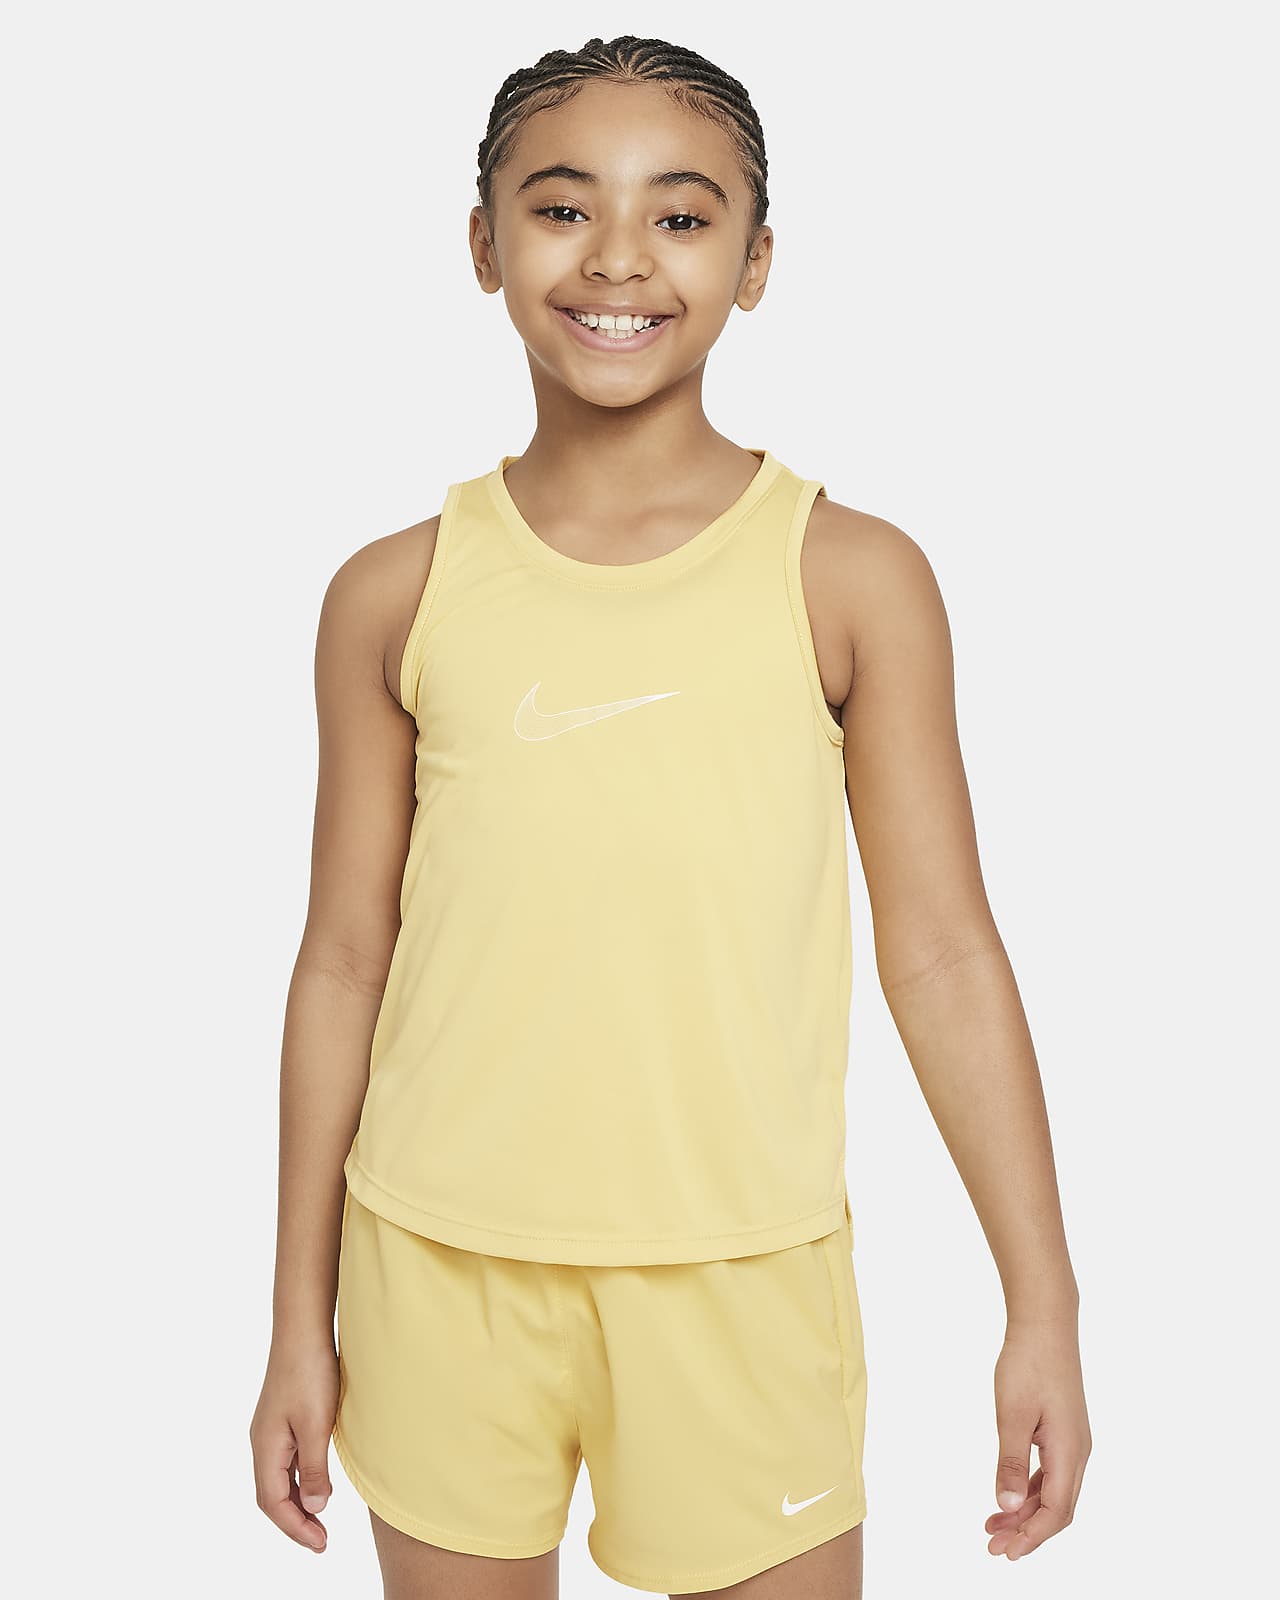 Camiseta de tirantes de entrenamiento Dri-FIT para niña talla grande Nike One